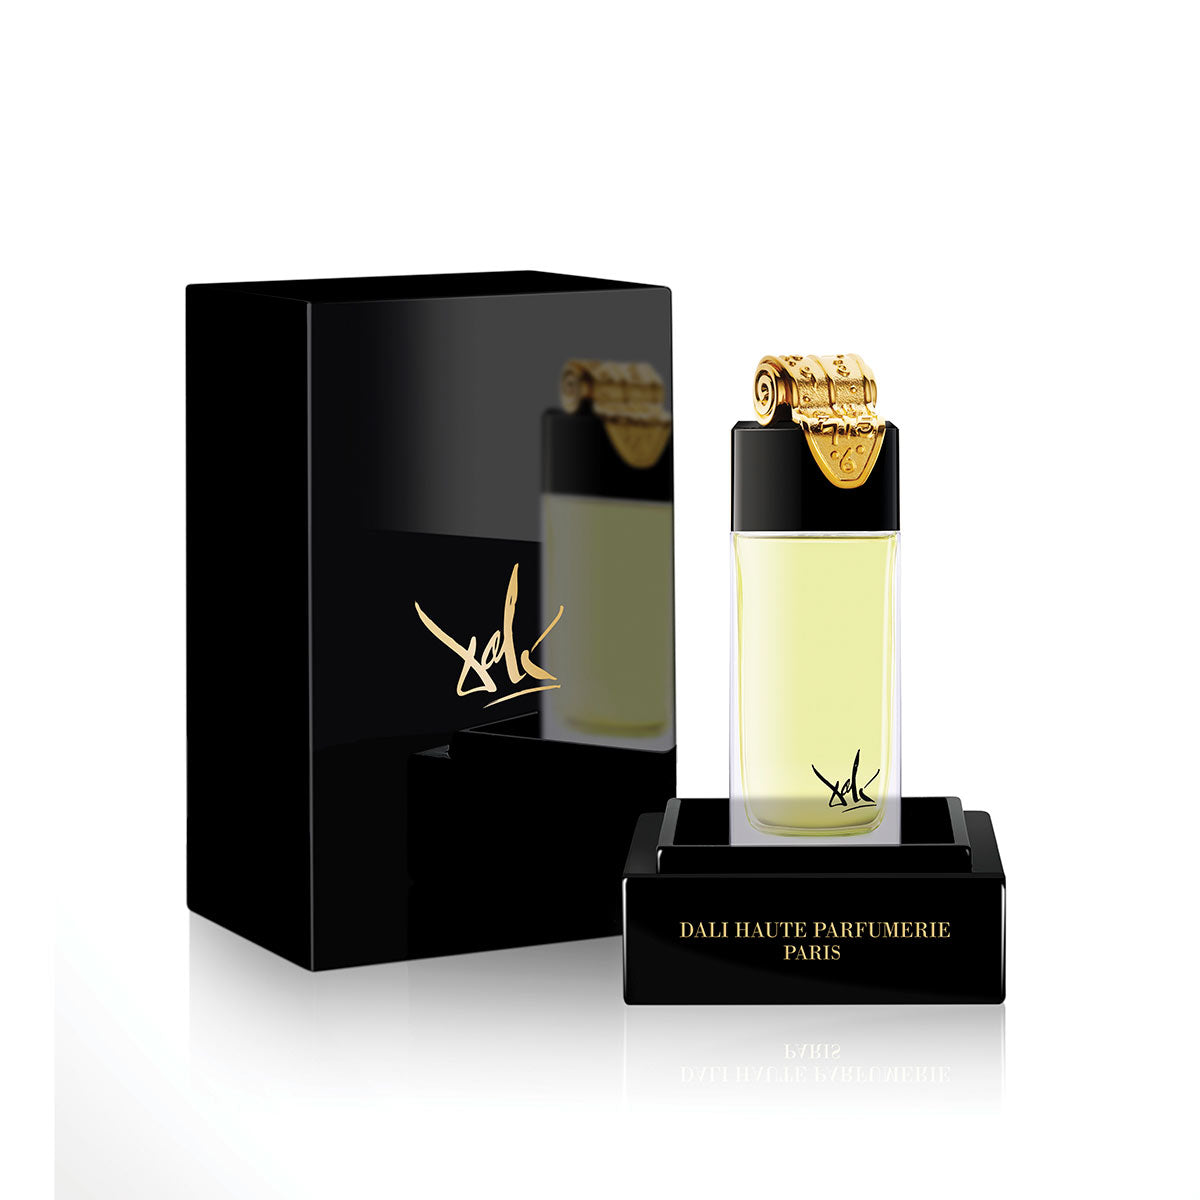 Fluidite Du Temps Imaginaire "The Clock" - Dali Haute Parfumerie - EDP 100ml